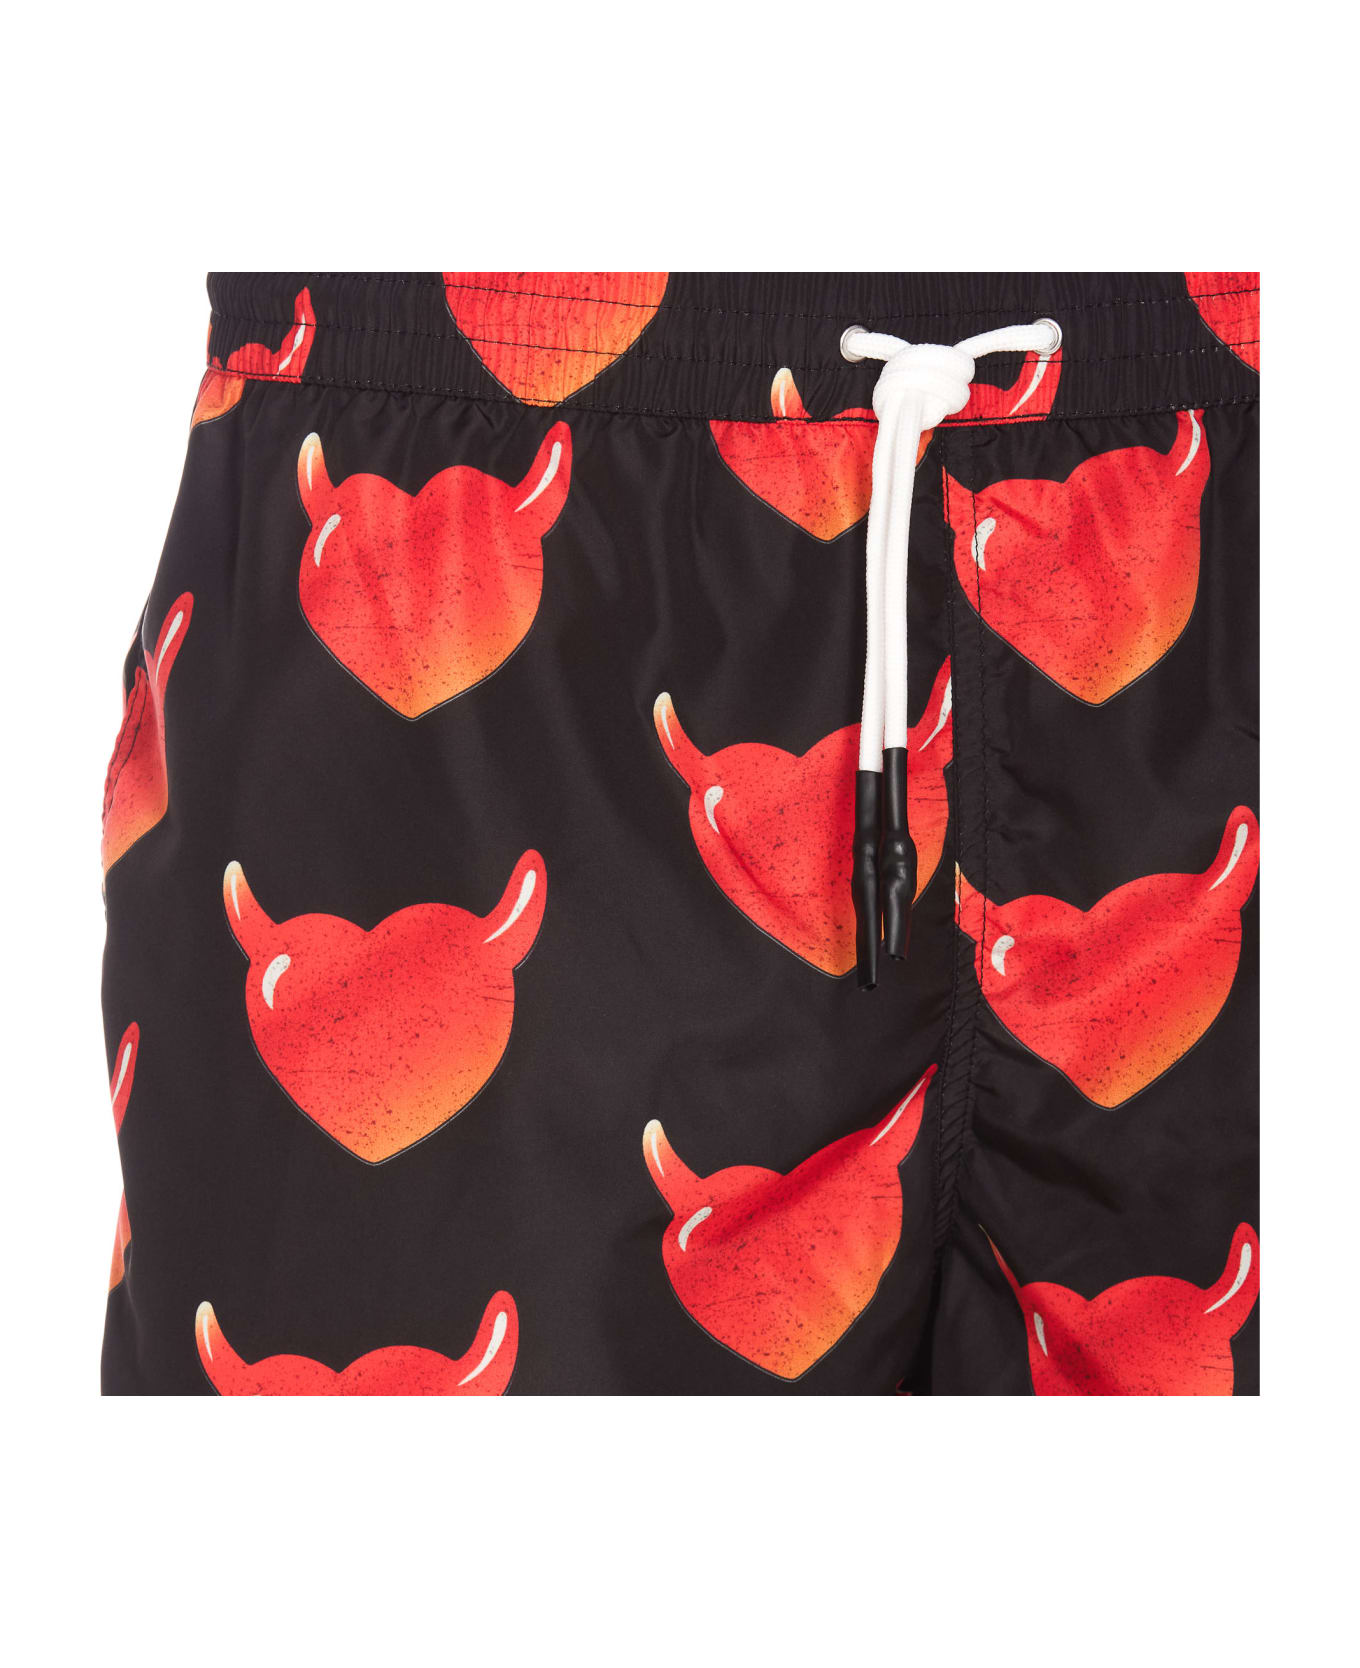 Vision of Super Vos Heart Allover Swimwear - BLACK/ORANGE